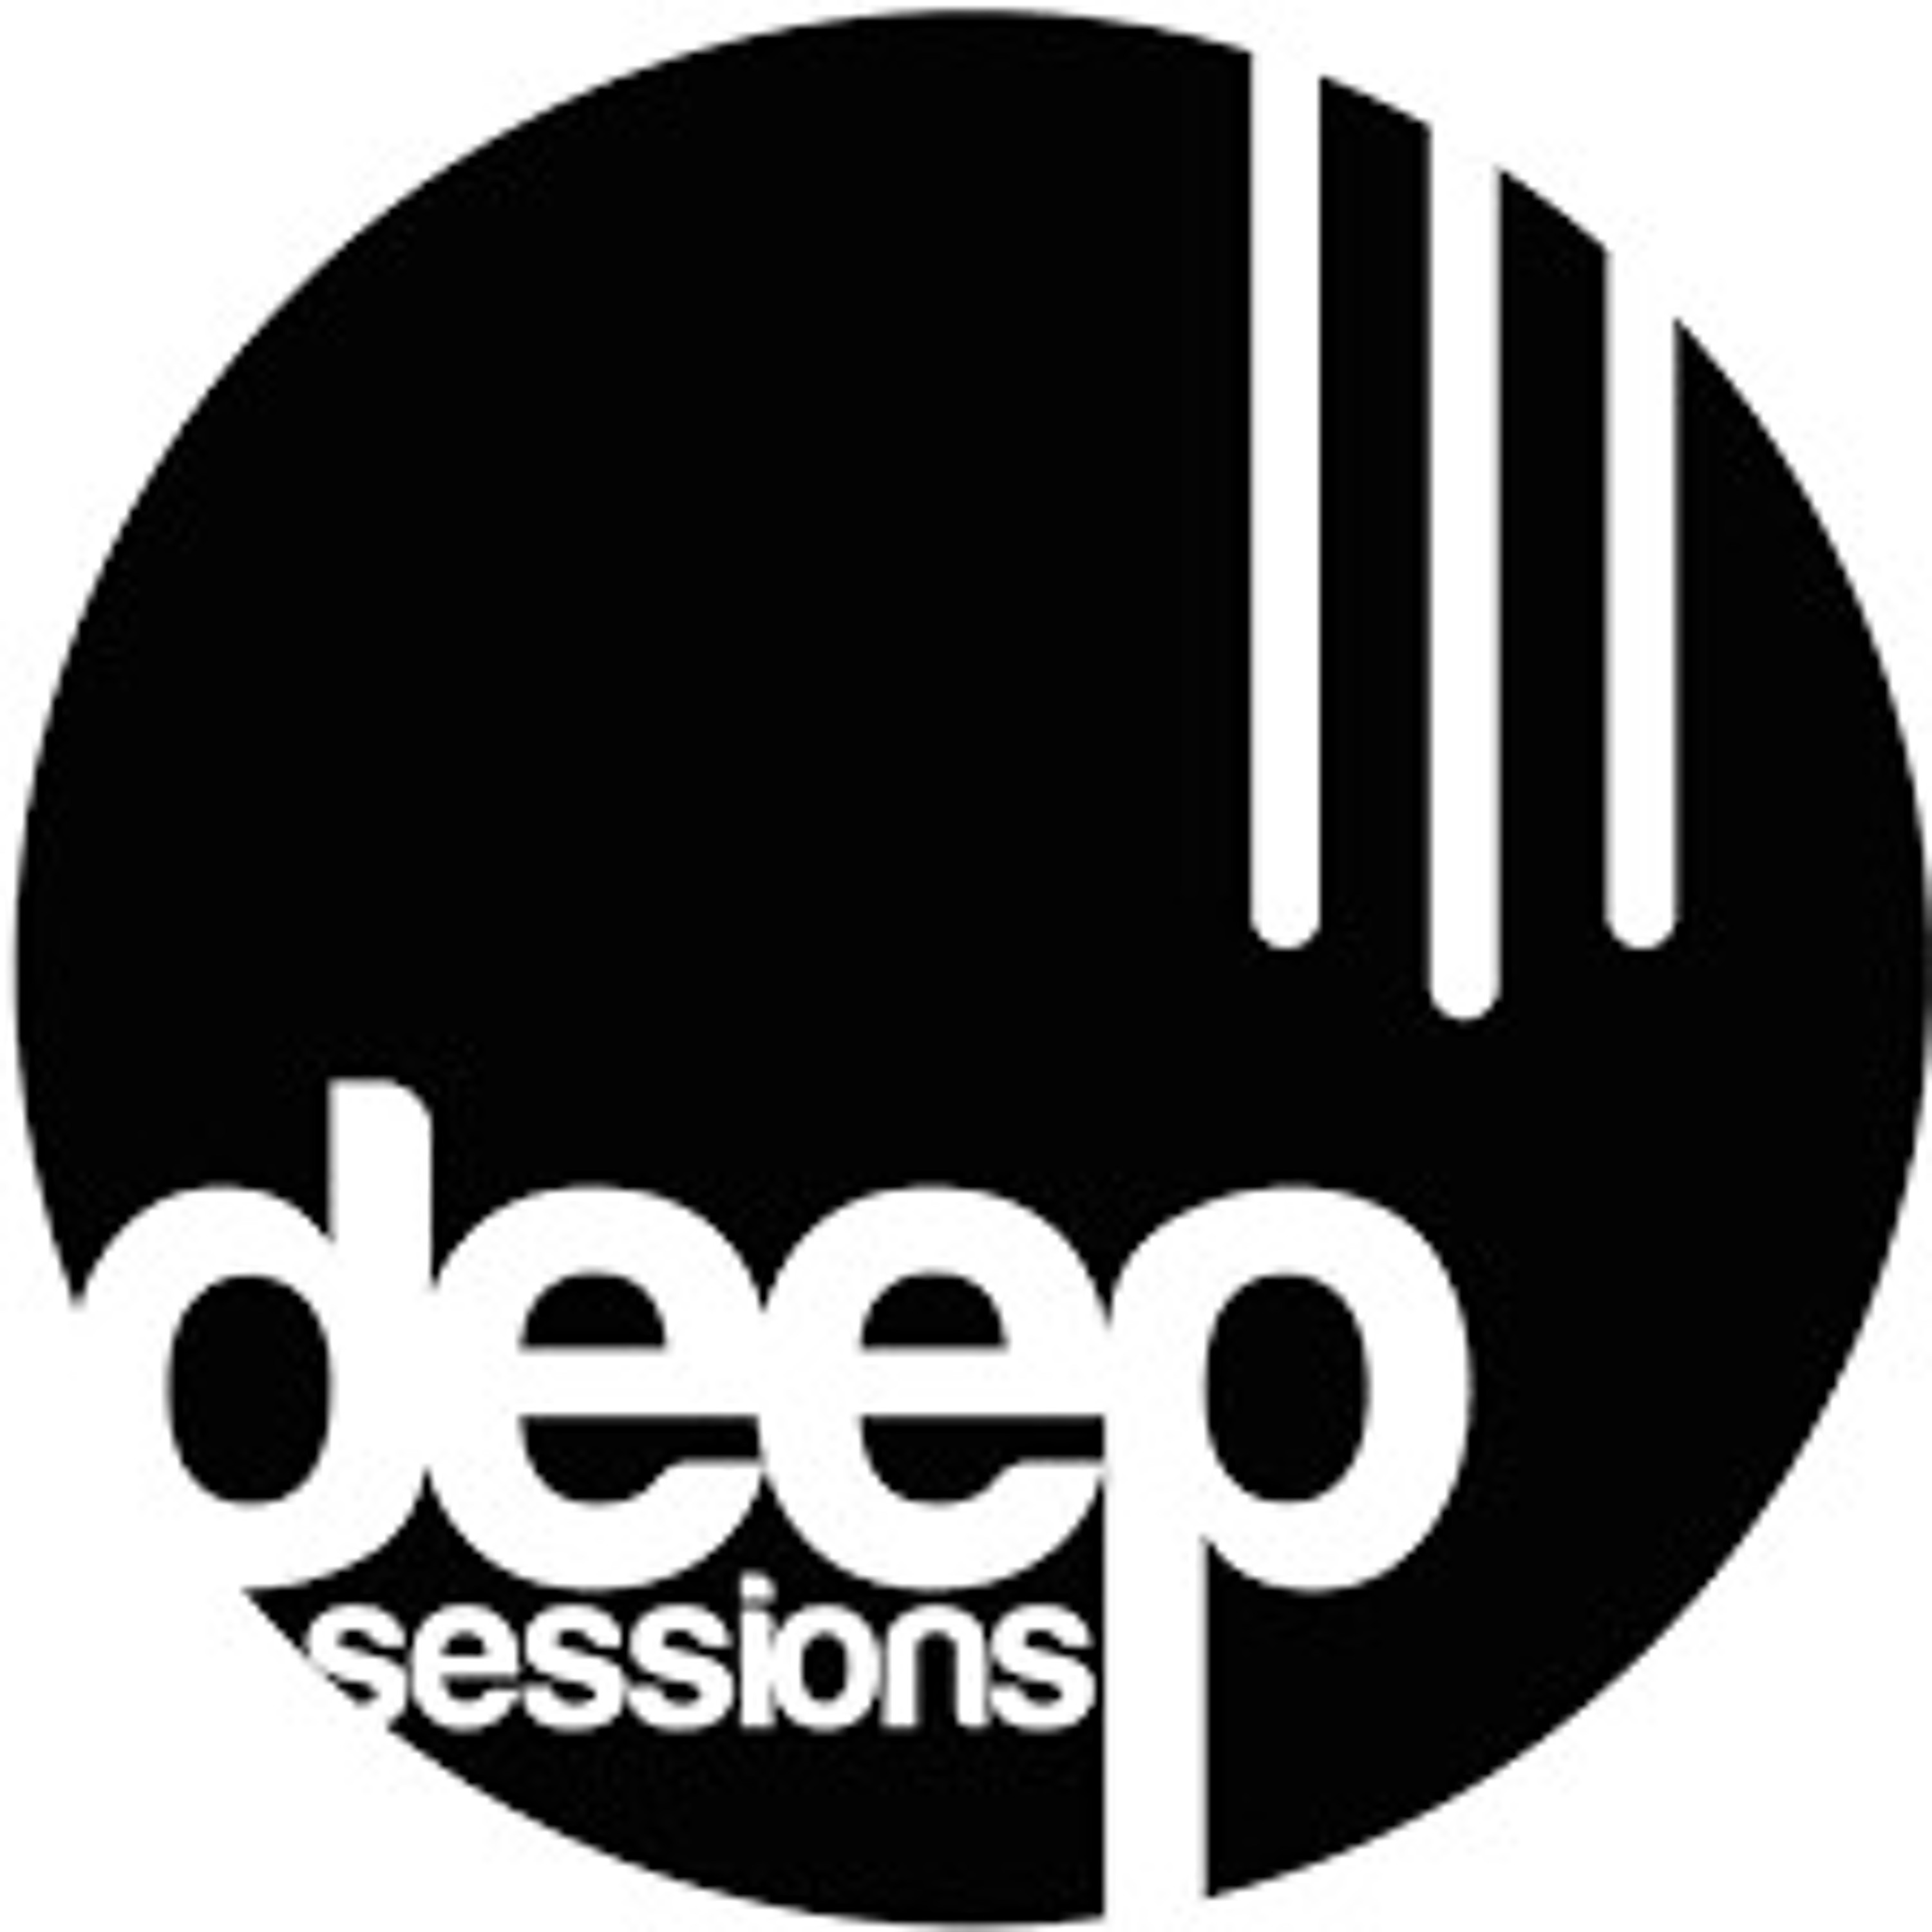 Deep Sessions #1 -Ft. Alix Perez, Ivy Lab, Halogenix, Monty, Calibre, Taelimb, GLXY, Kid Drama, T>I Artwork